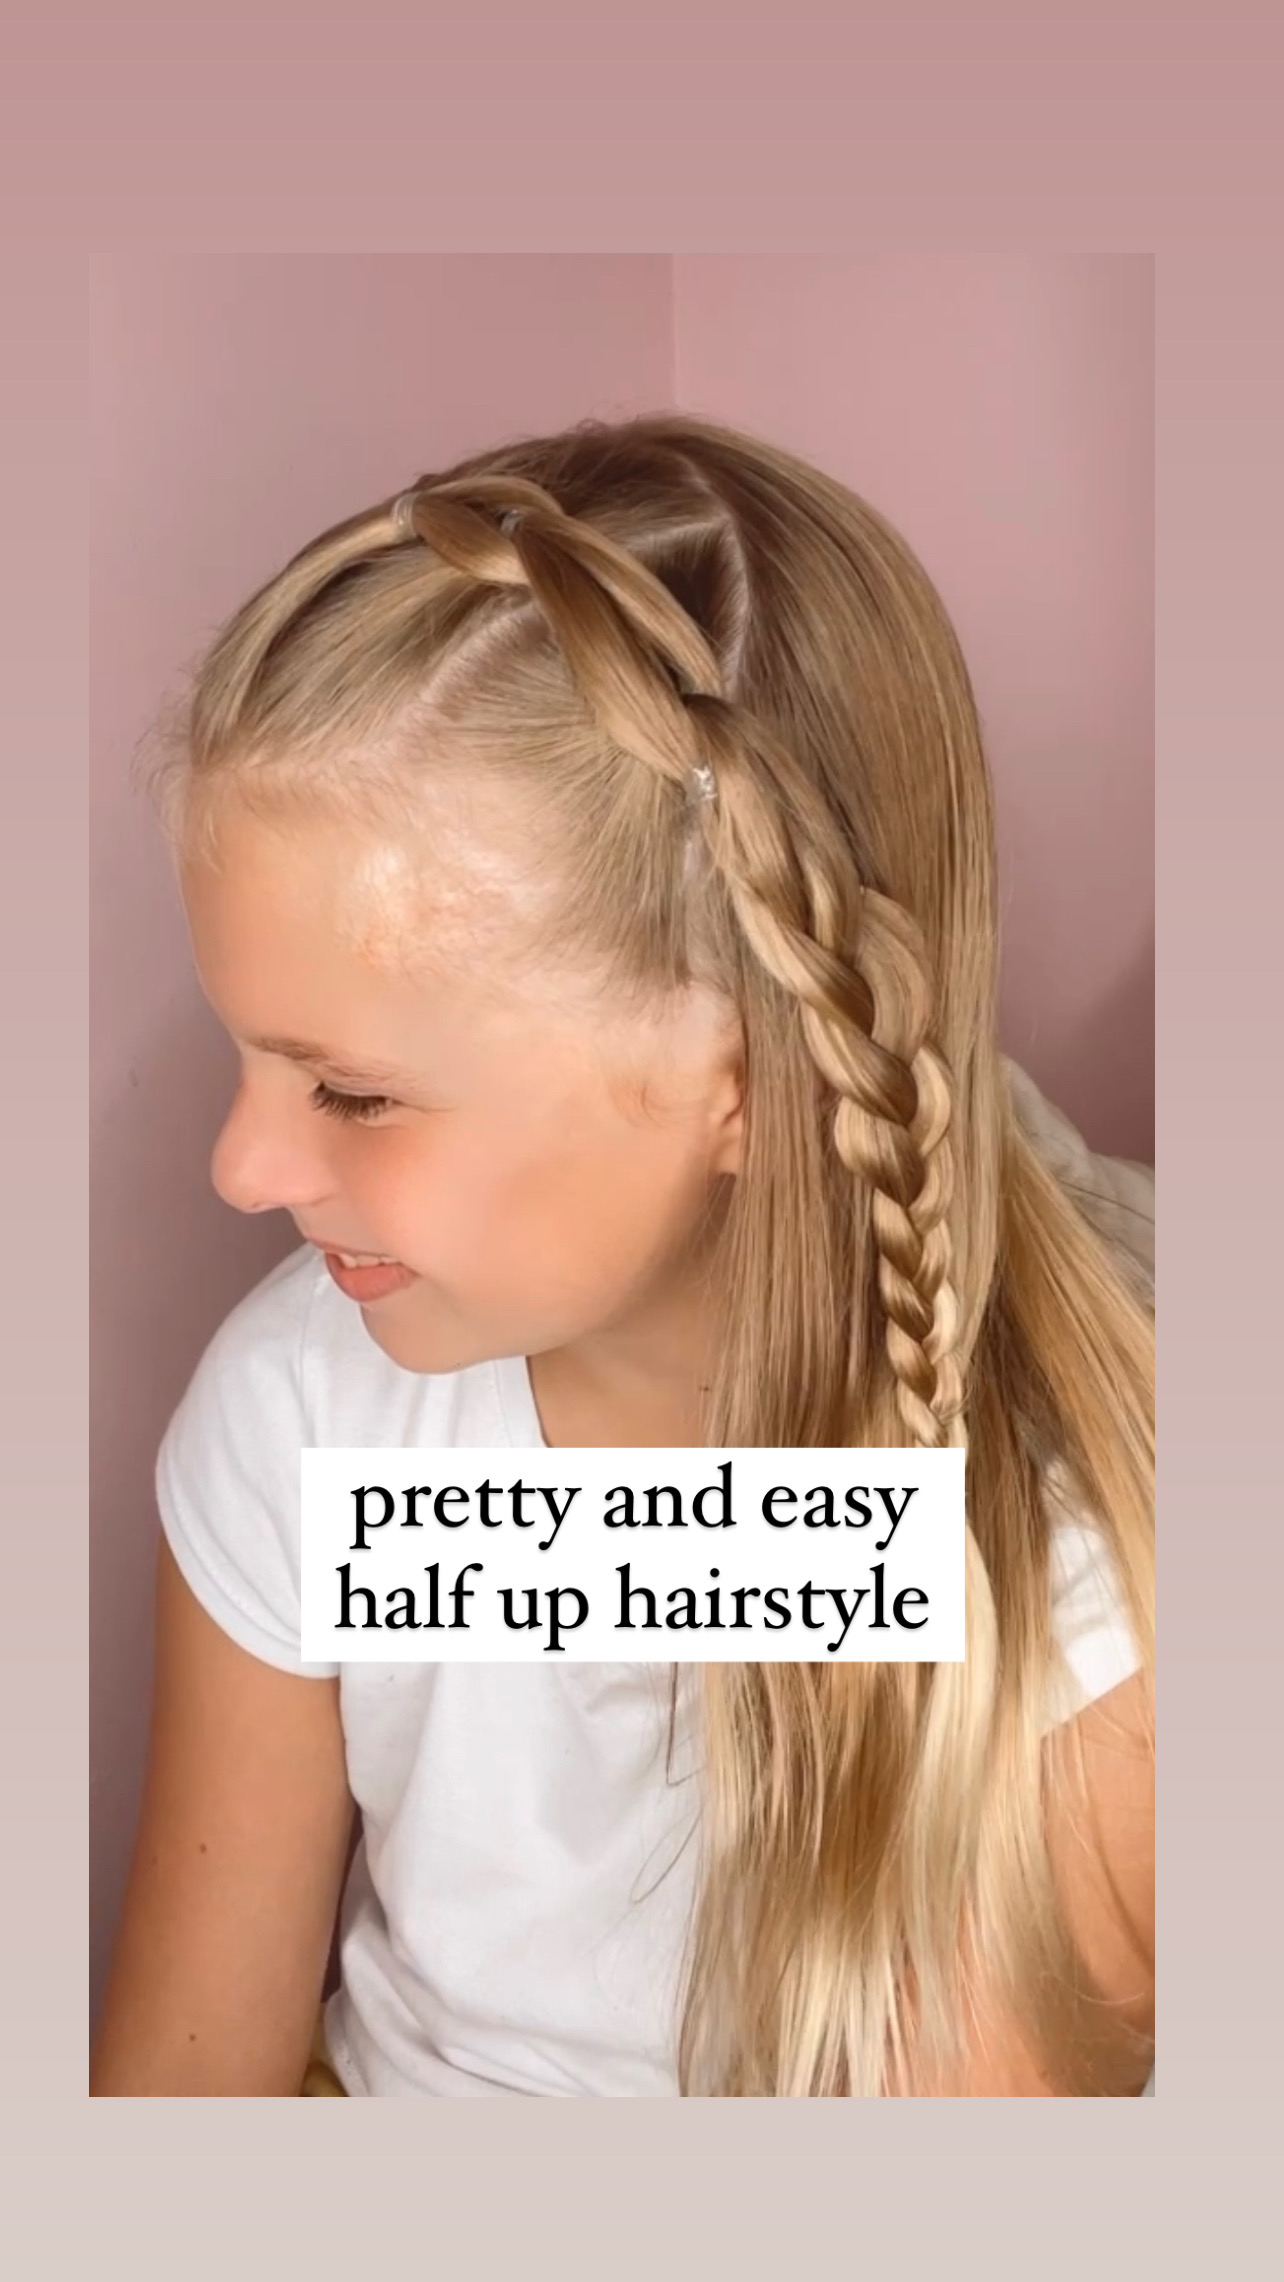 3 EASY HALF UP HAIRSTYLES SPRING 2021 - Medium - Long Hair Type